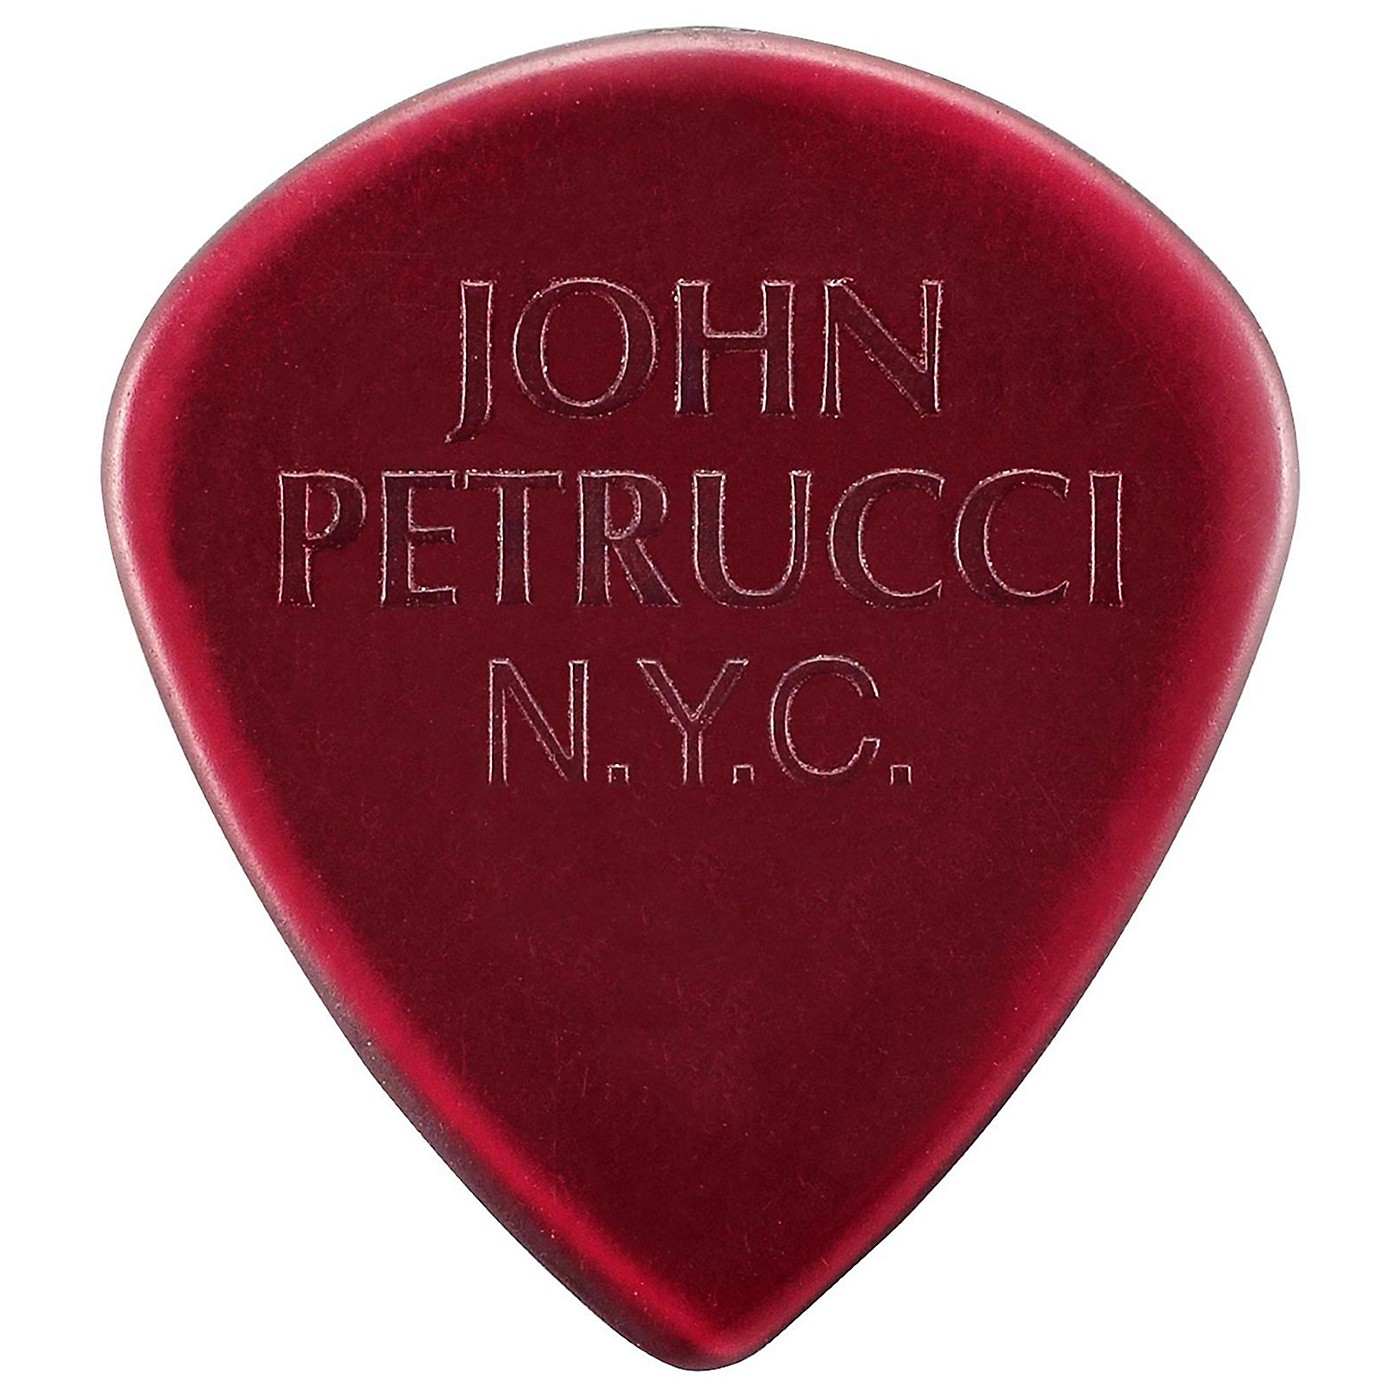 Dunlop John Petrucci Primetone Jazz III Pick, Red, 3/Player's Pack thumbnail